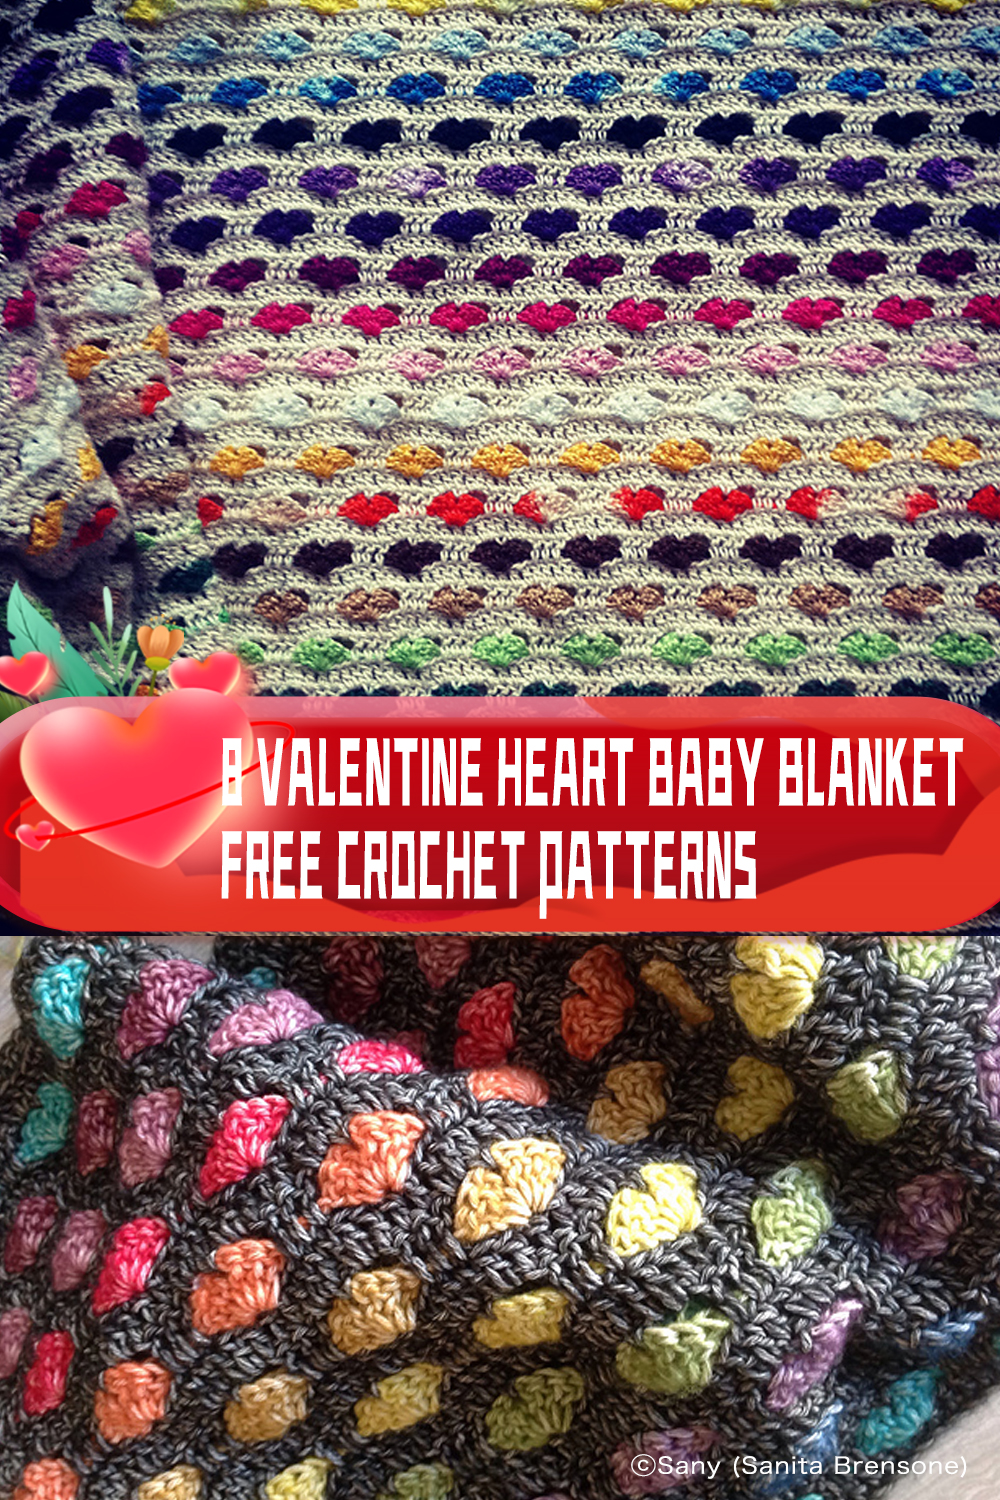 8 Valentine Heart Baby Blanket Free Crochet Patterns